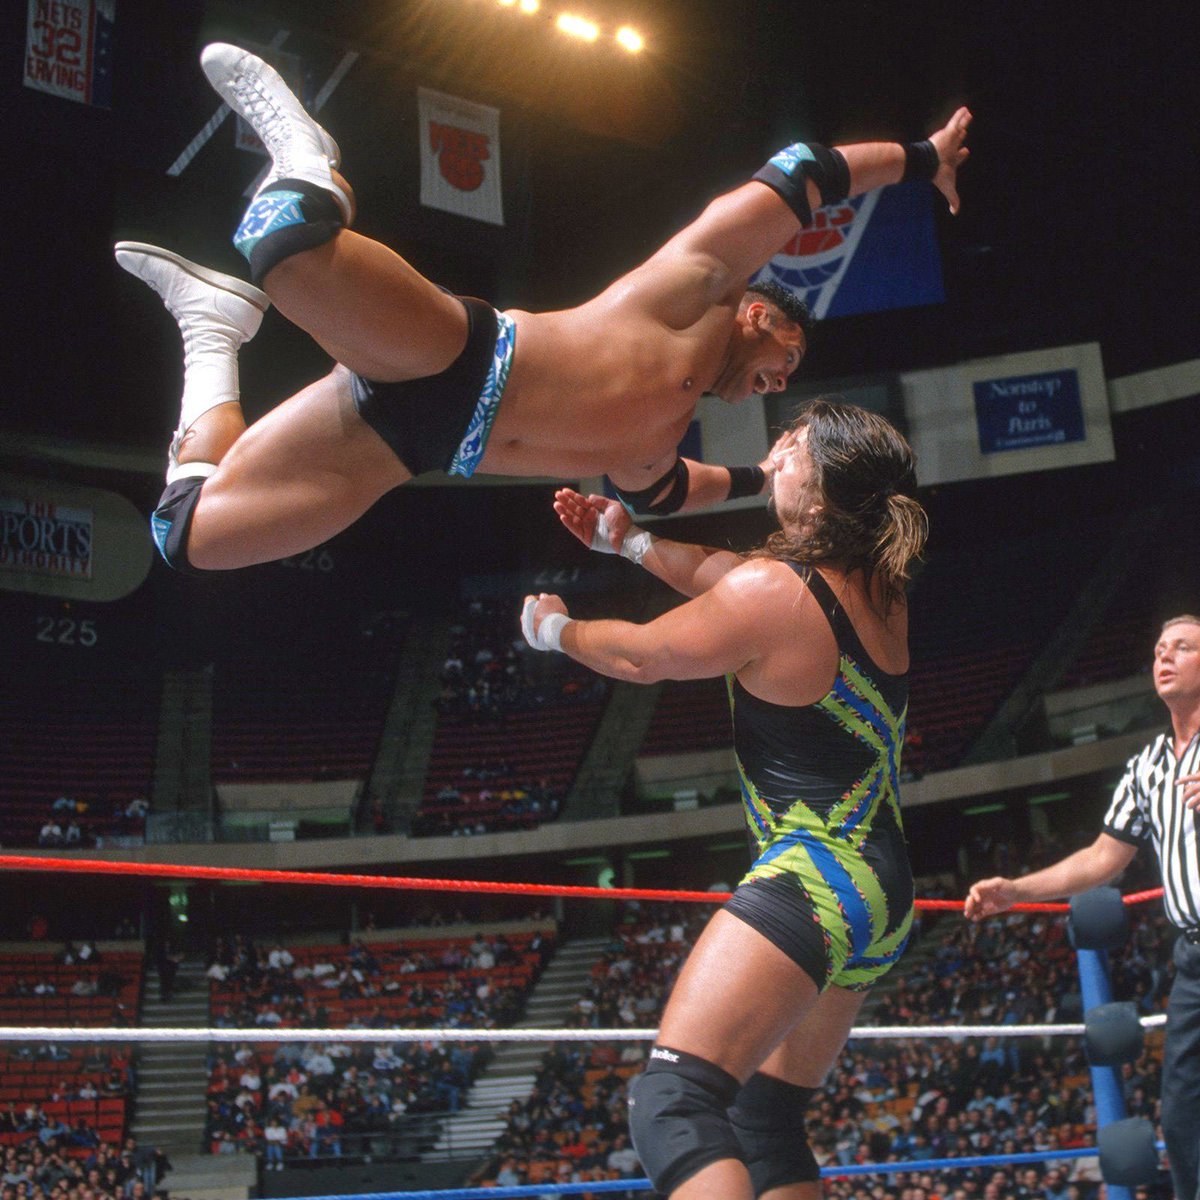 📸 WWF Action Shot! #WWF #WWE #Wrestling #LeifCassidy #RockyMaivia